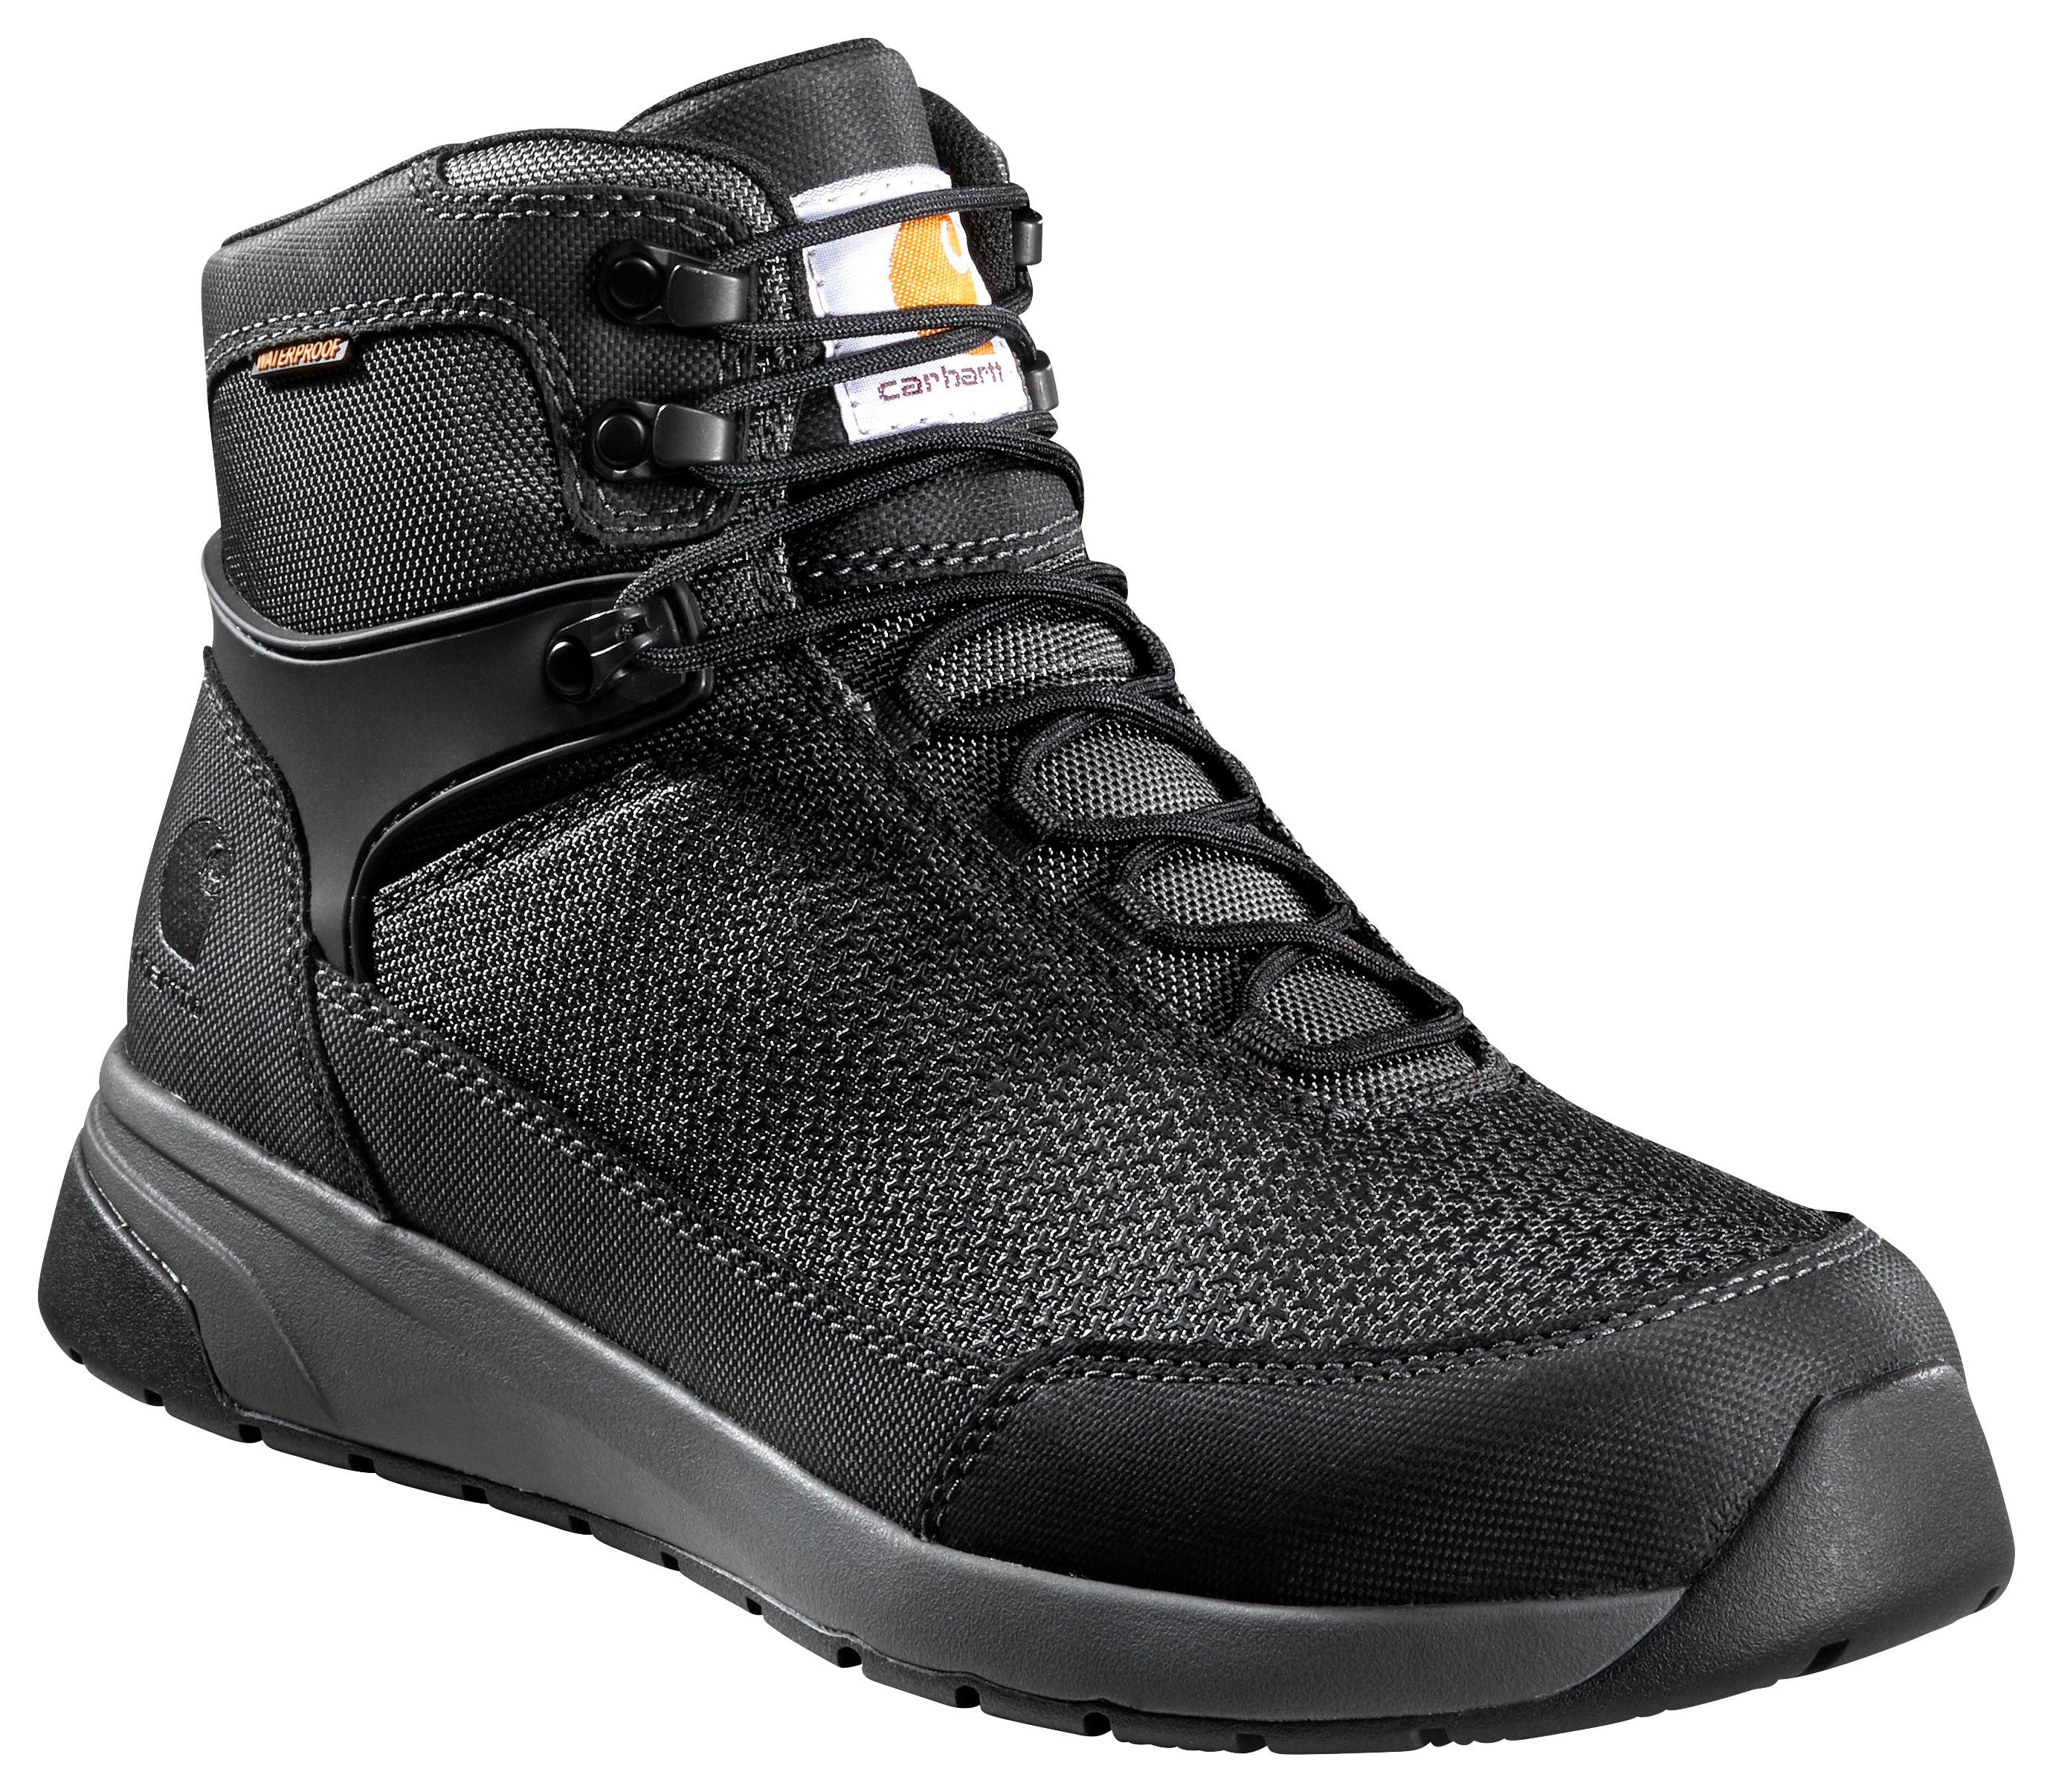 Carhartt Force 6"" Nano Composite-Toe Work Boots for Men - Black - 10.5M